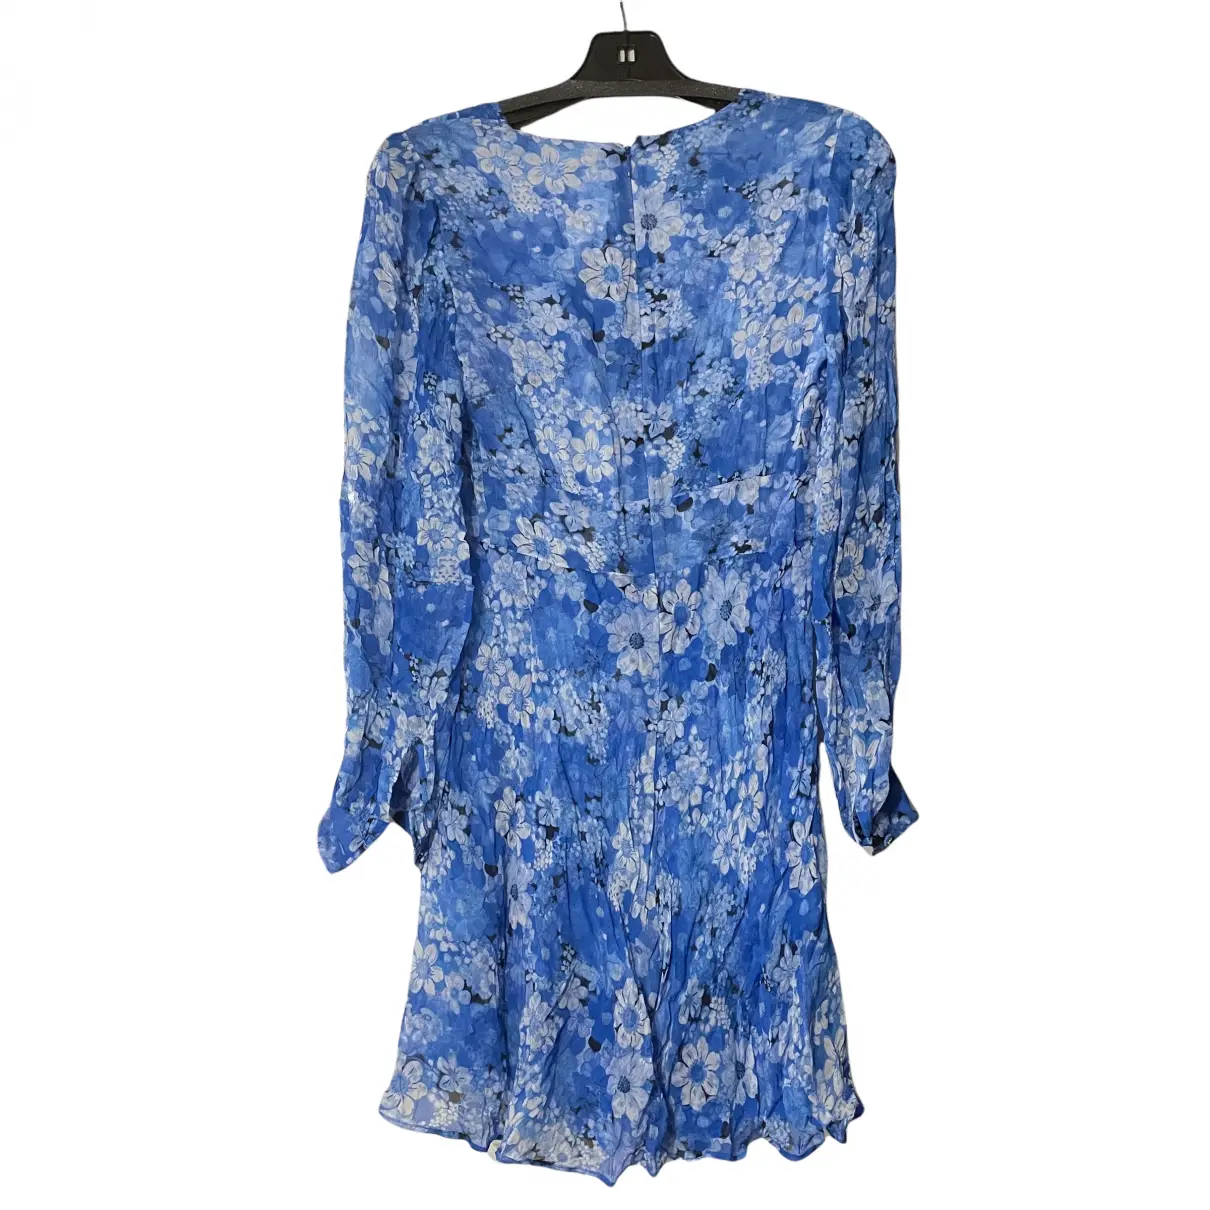 Buy The Kooples Spring Summer 2020 mid-length dress online